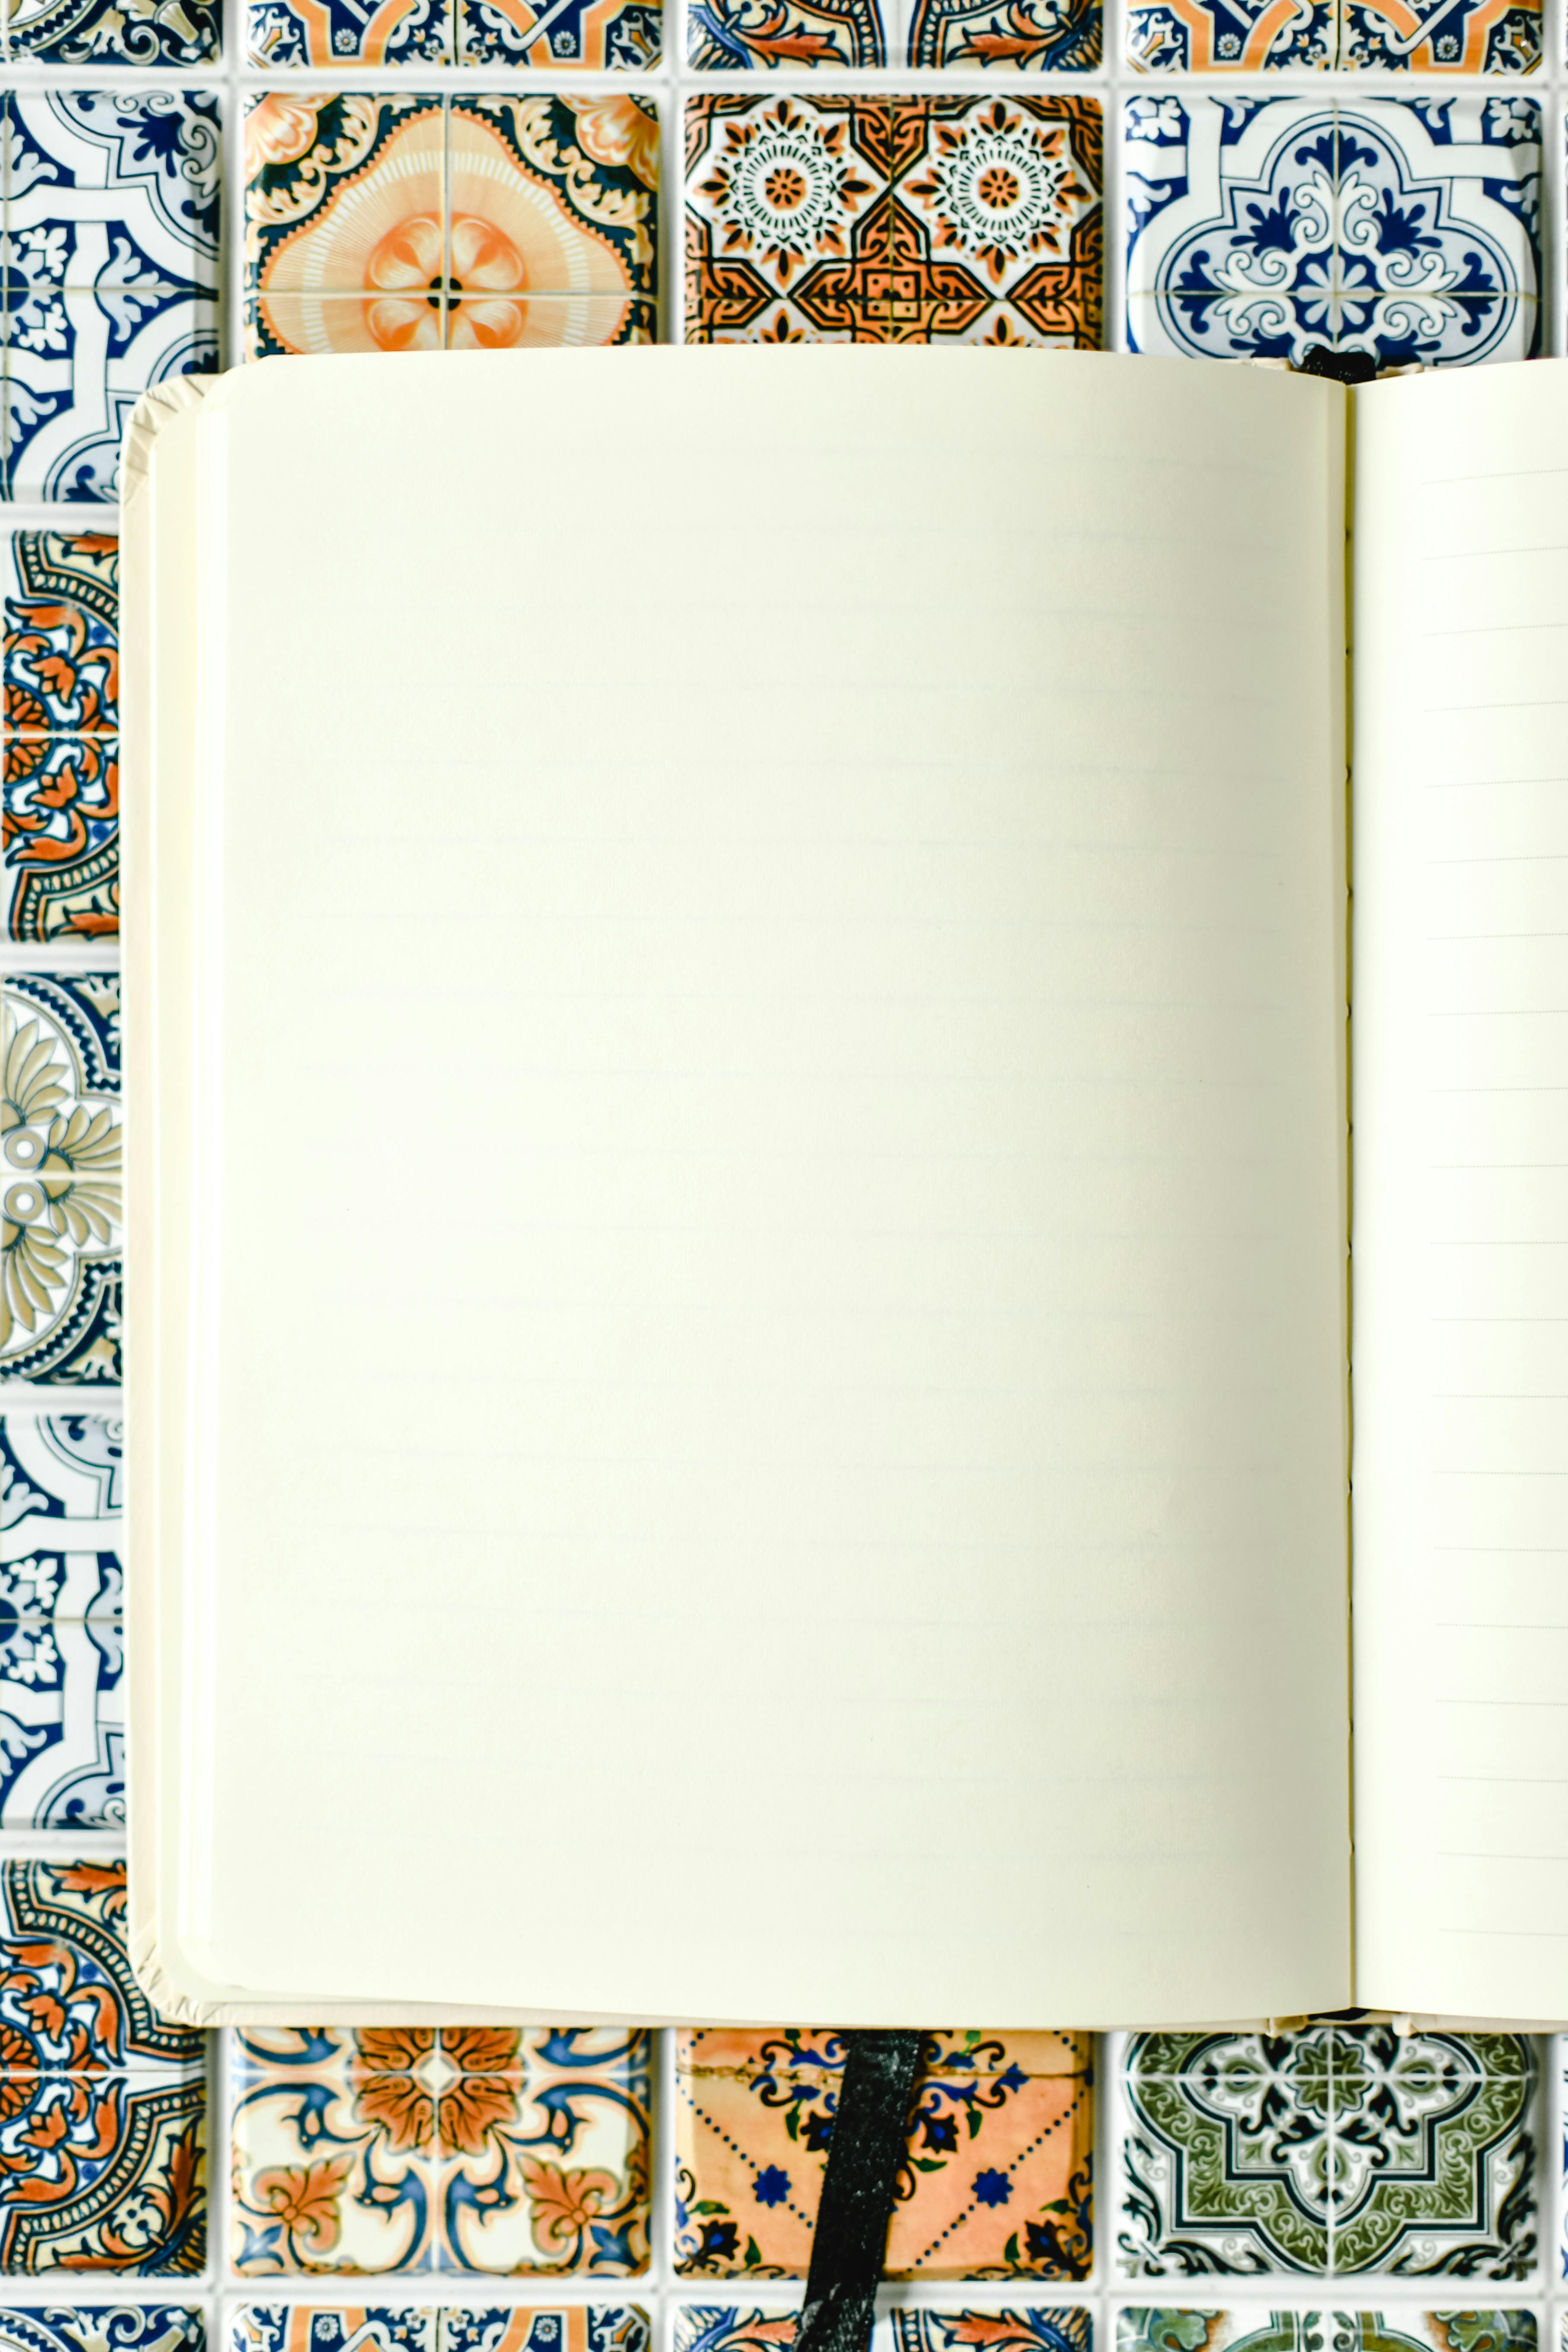 White printer paper on white surface photo – Free Book Image on Unsplash